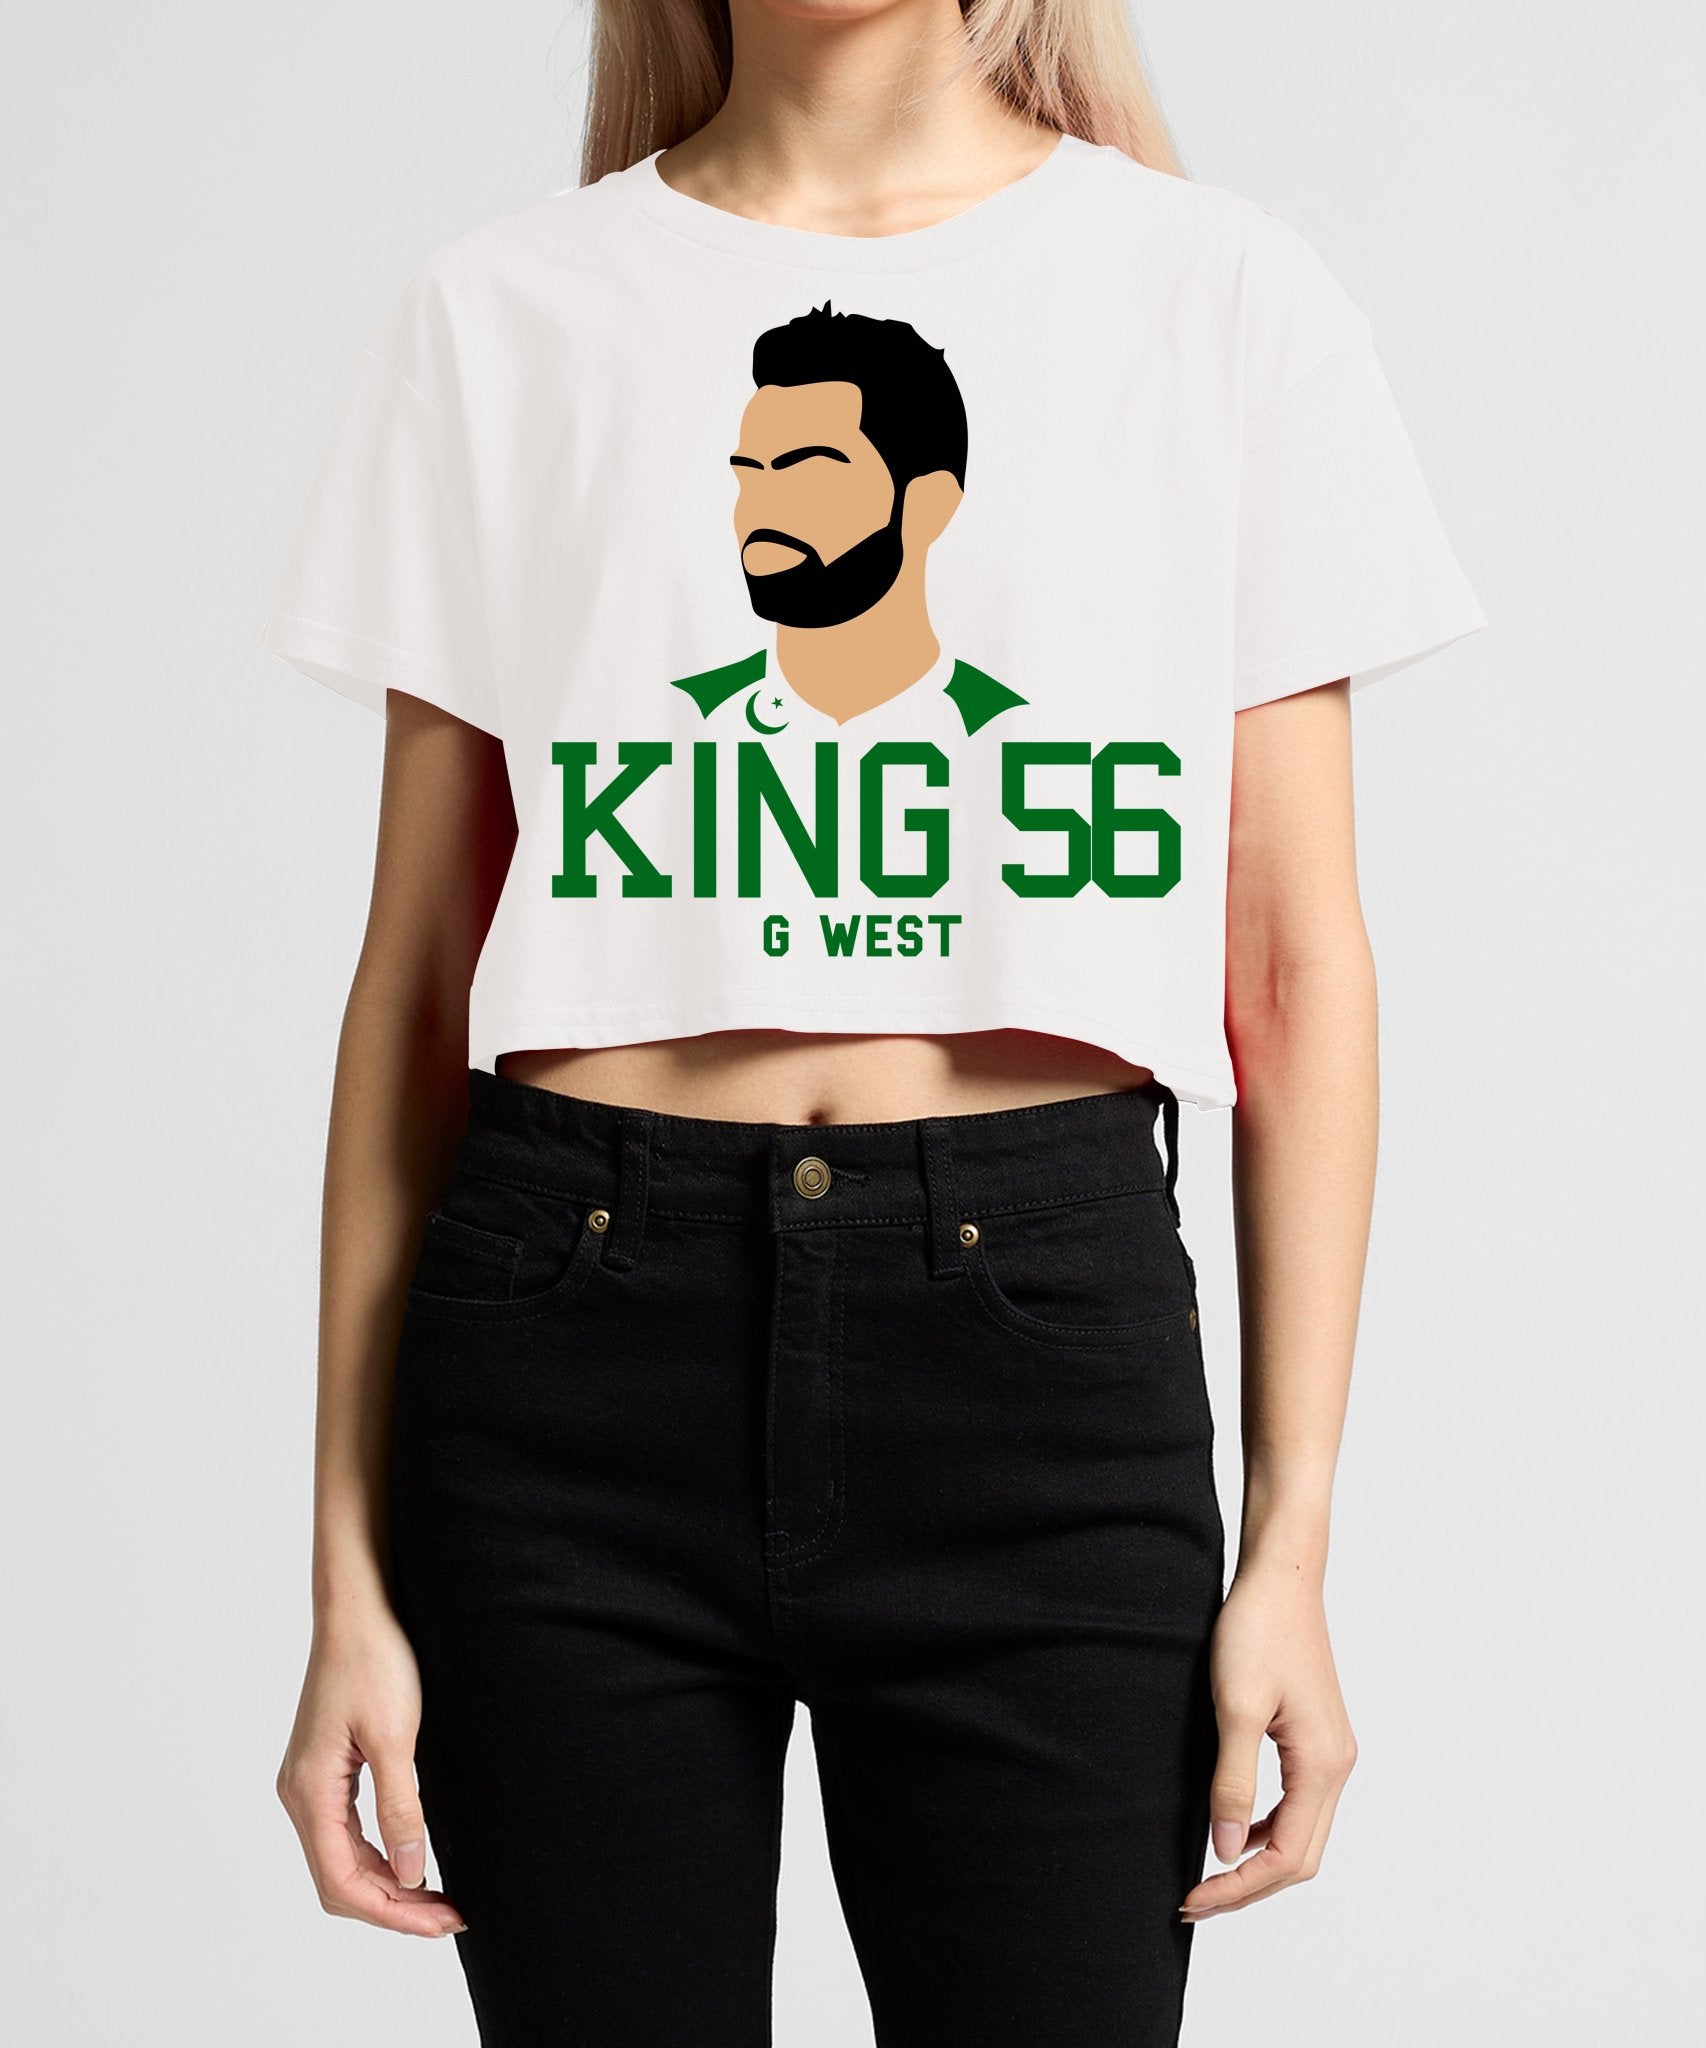 G West Women Pakistan Cricket King 56 White T - Shirt : GWWSCDTF2408 - G West